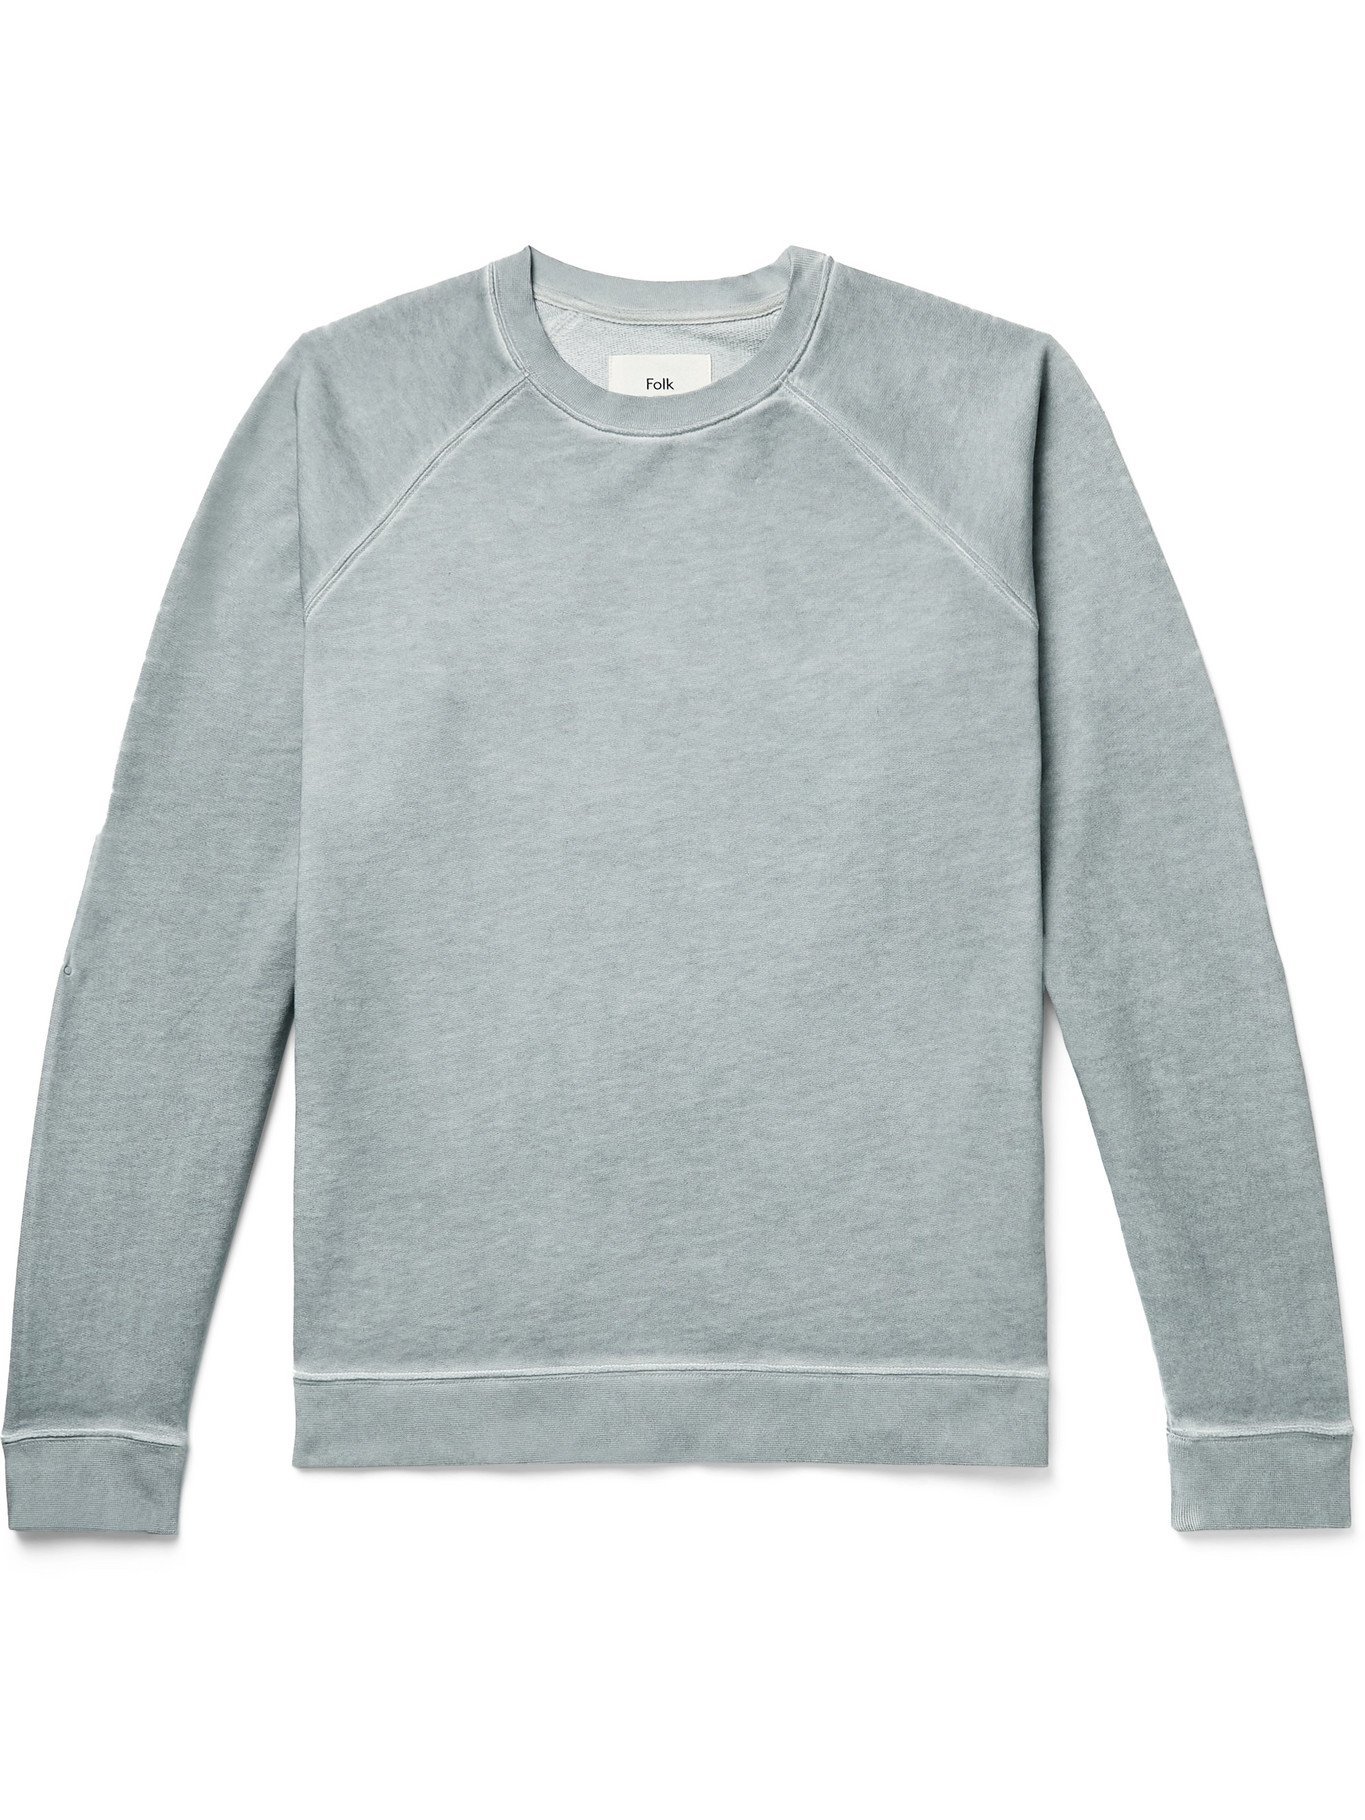 FOLK - Rivet Loopback Cotton-Jersey Sweatshirt - Gray - 1 Folk